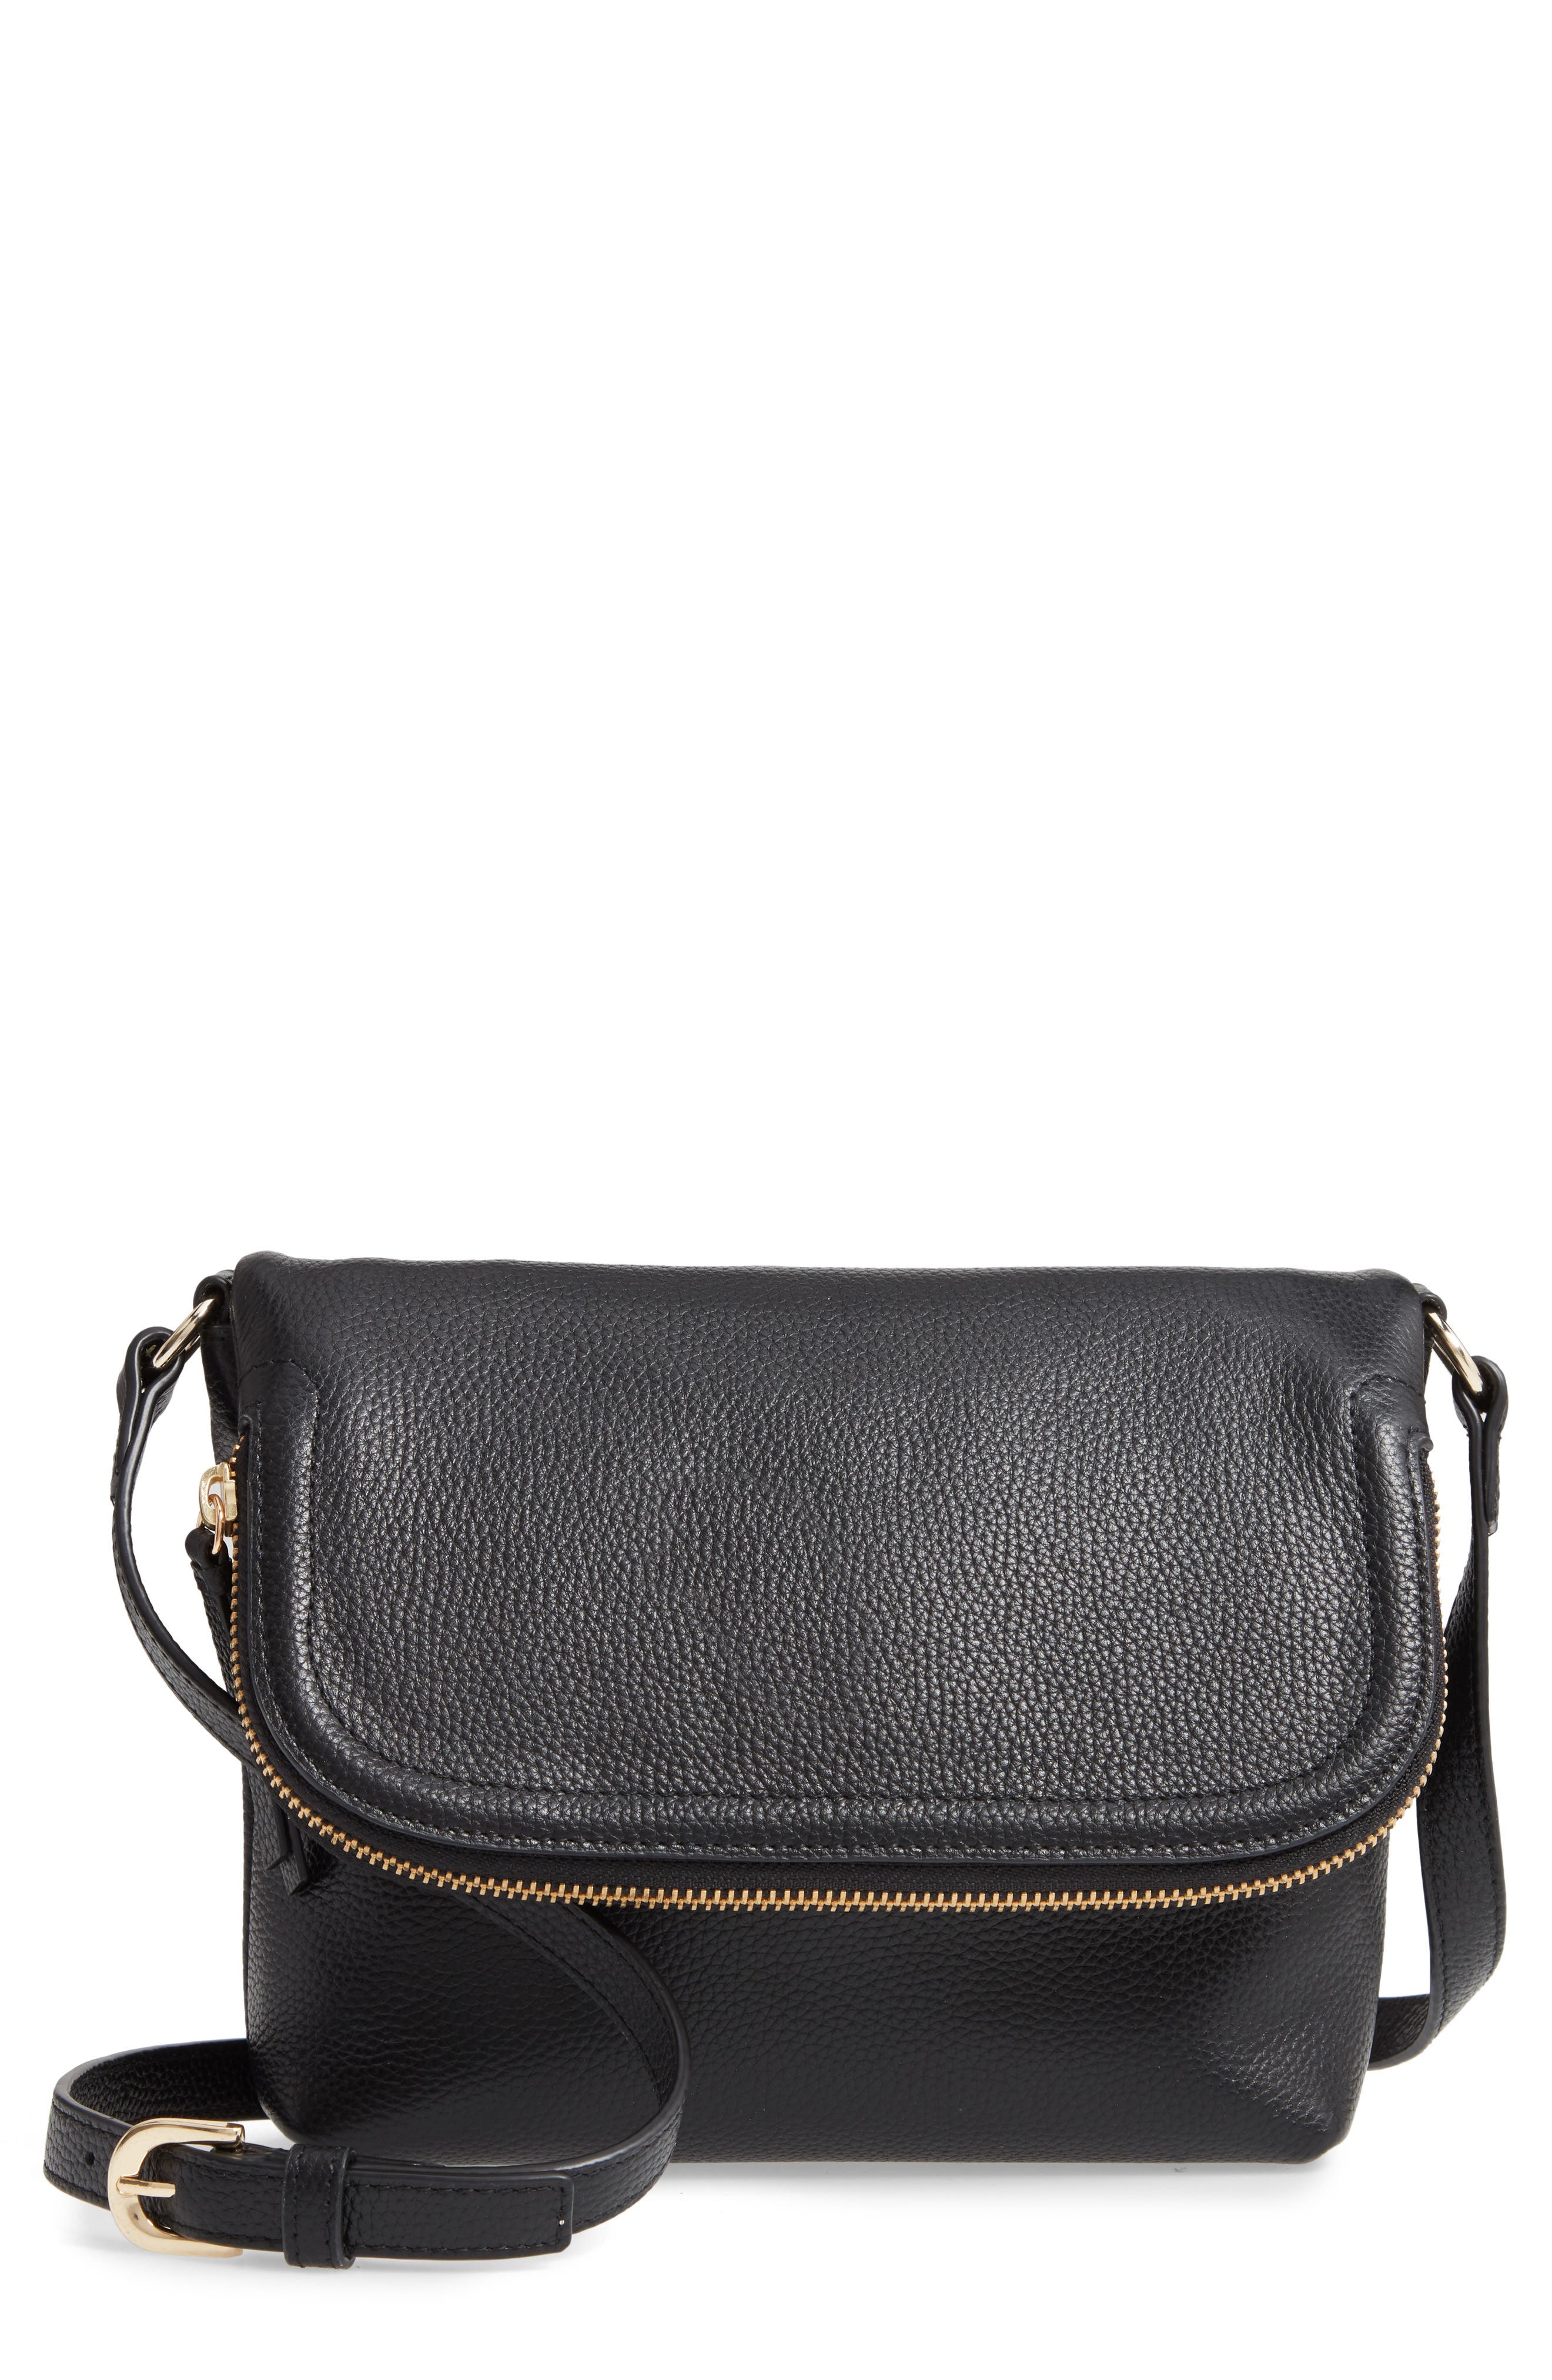 leather crossbody purse black